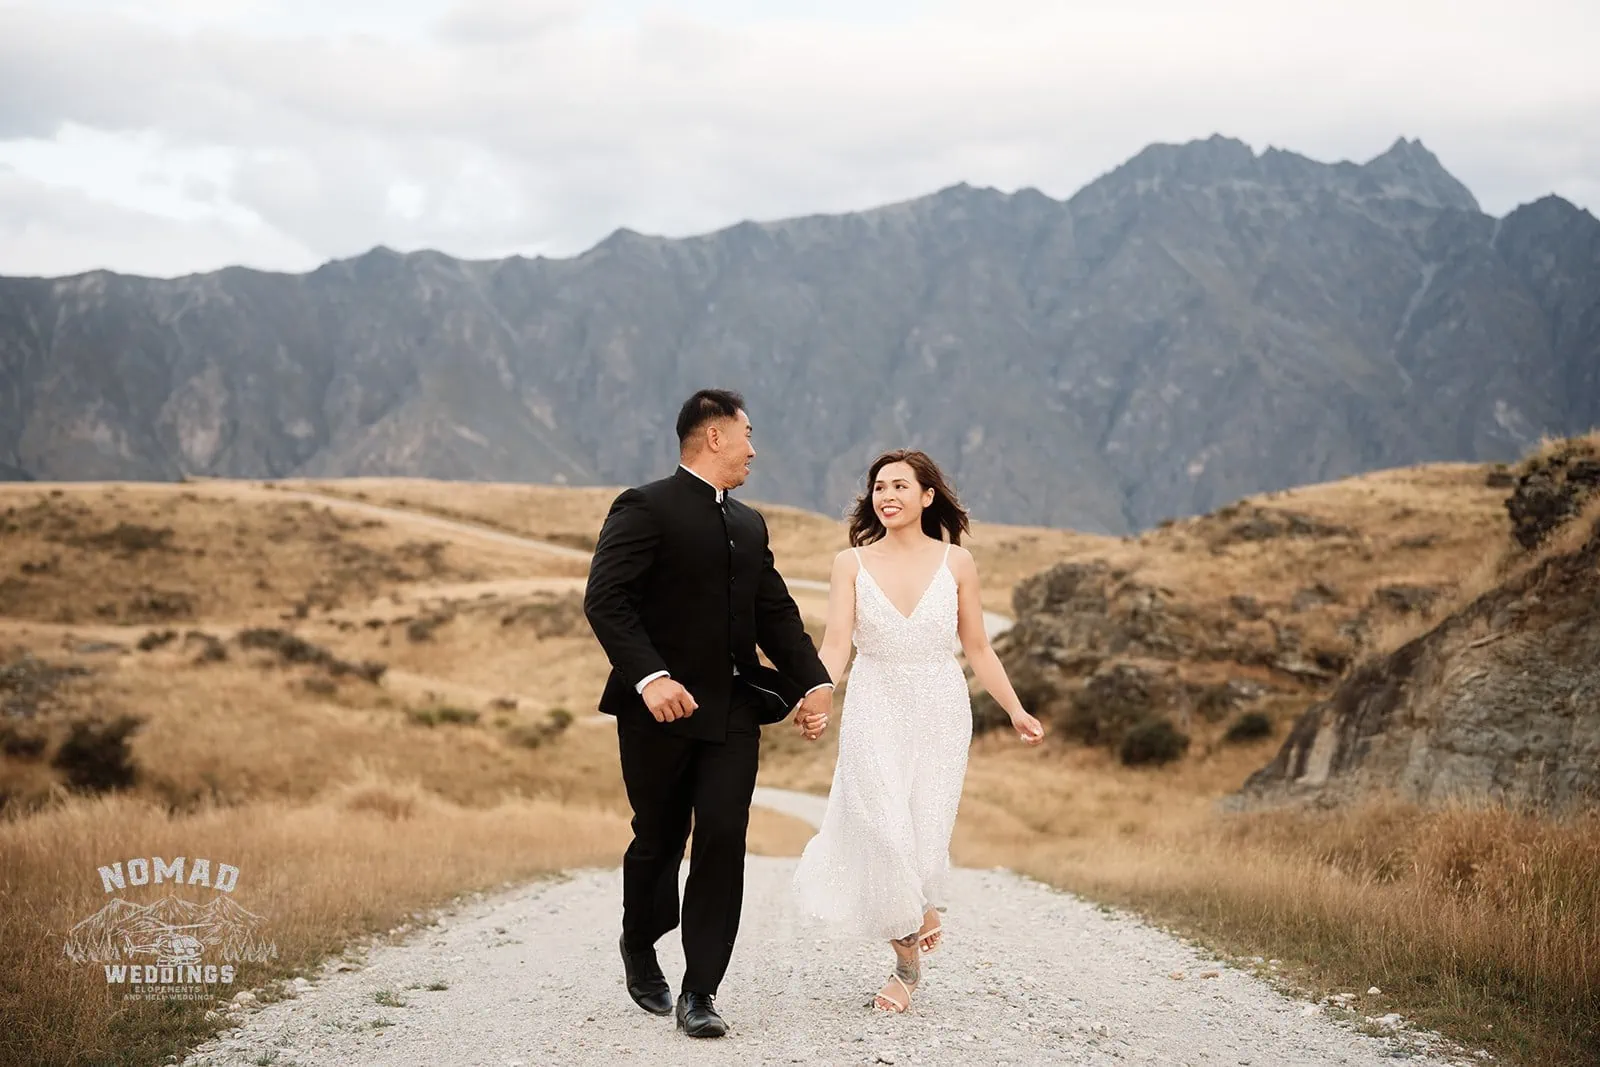 Nhi & Nicholas' Queenstown NZ pre-wedding shoot featuring mountains and a dirt road.